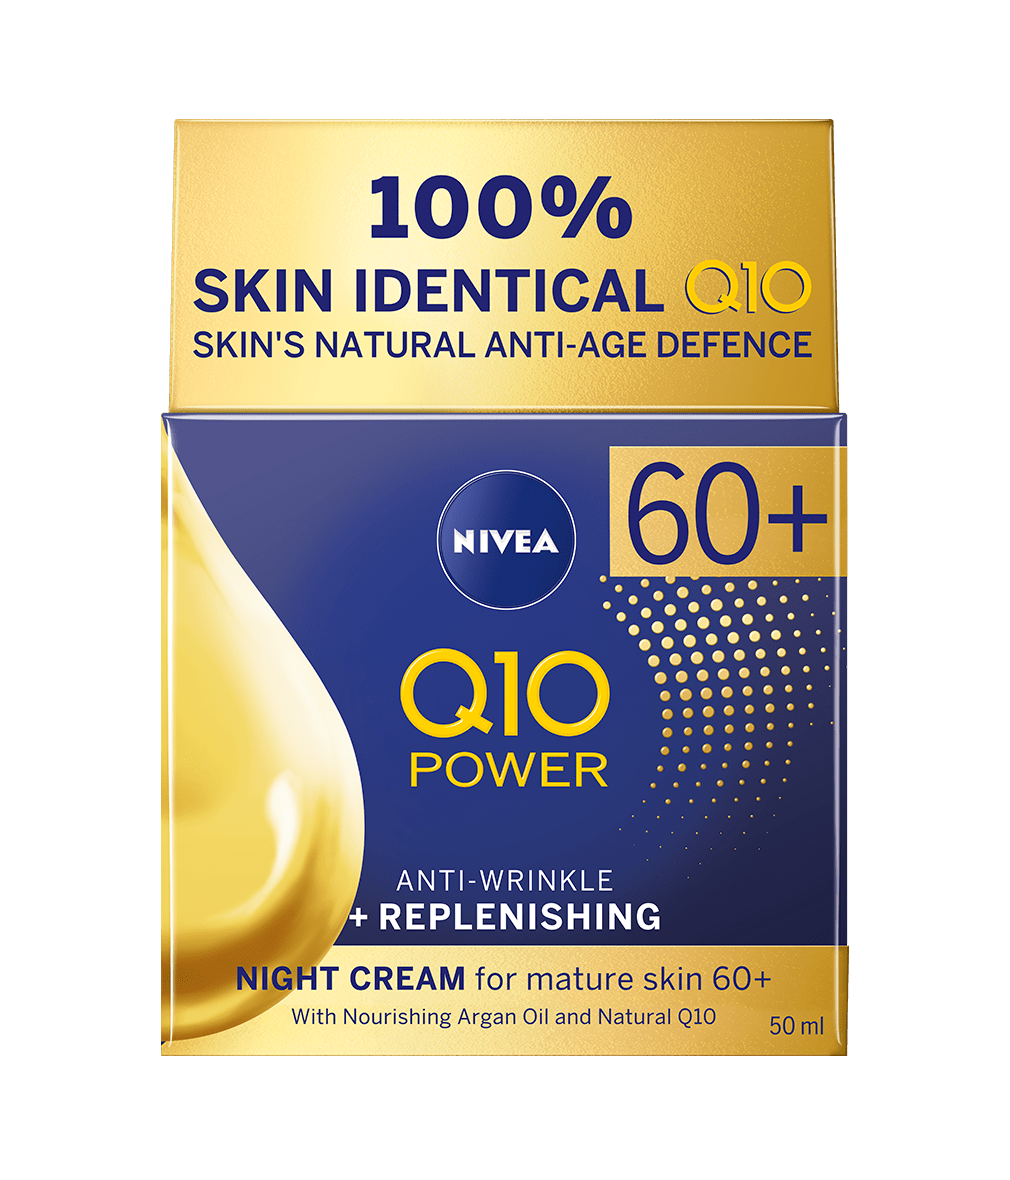 nivea q10 power 60+ anti-wrinkle replenishing night cream